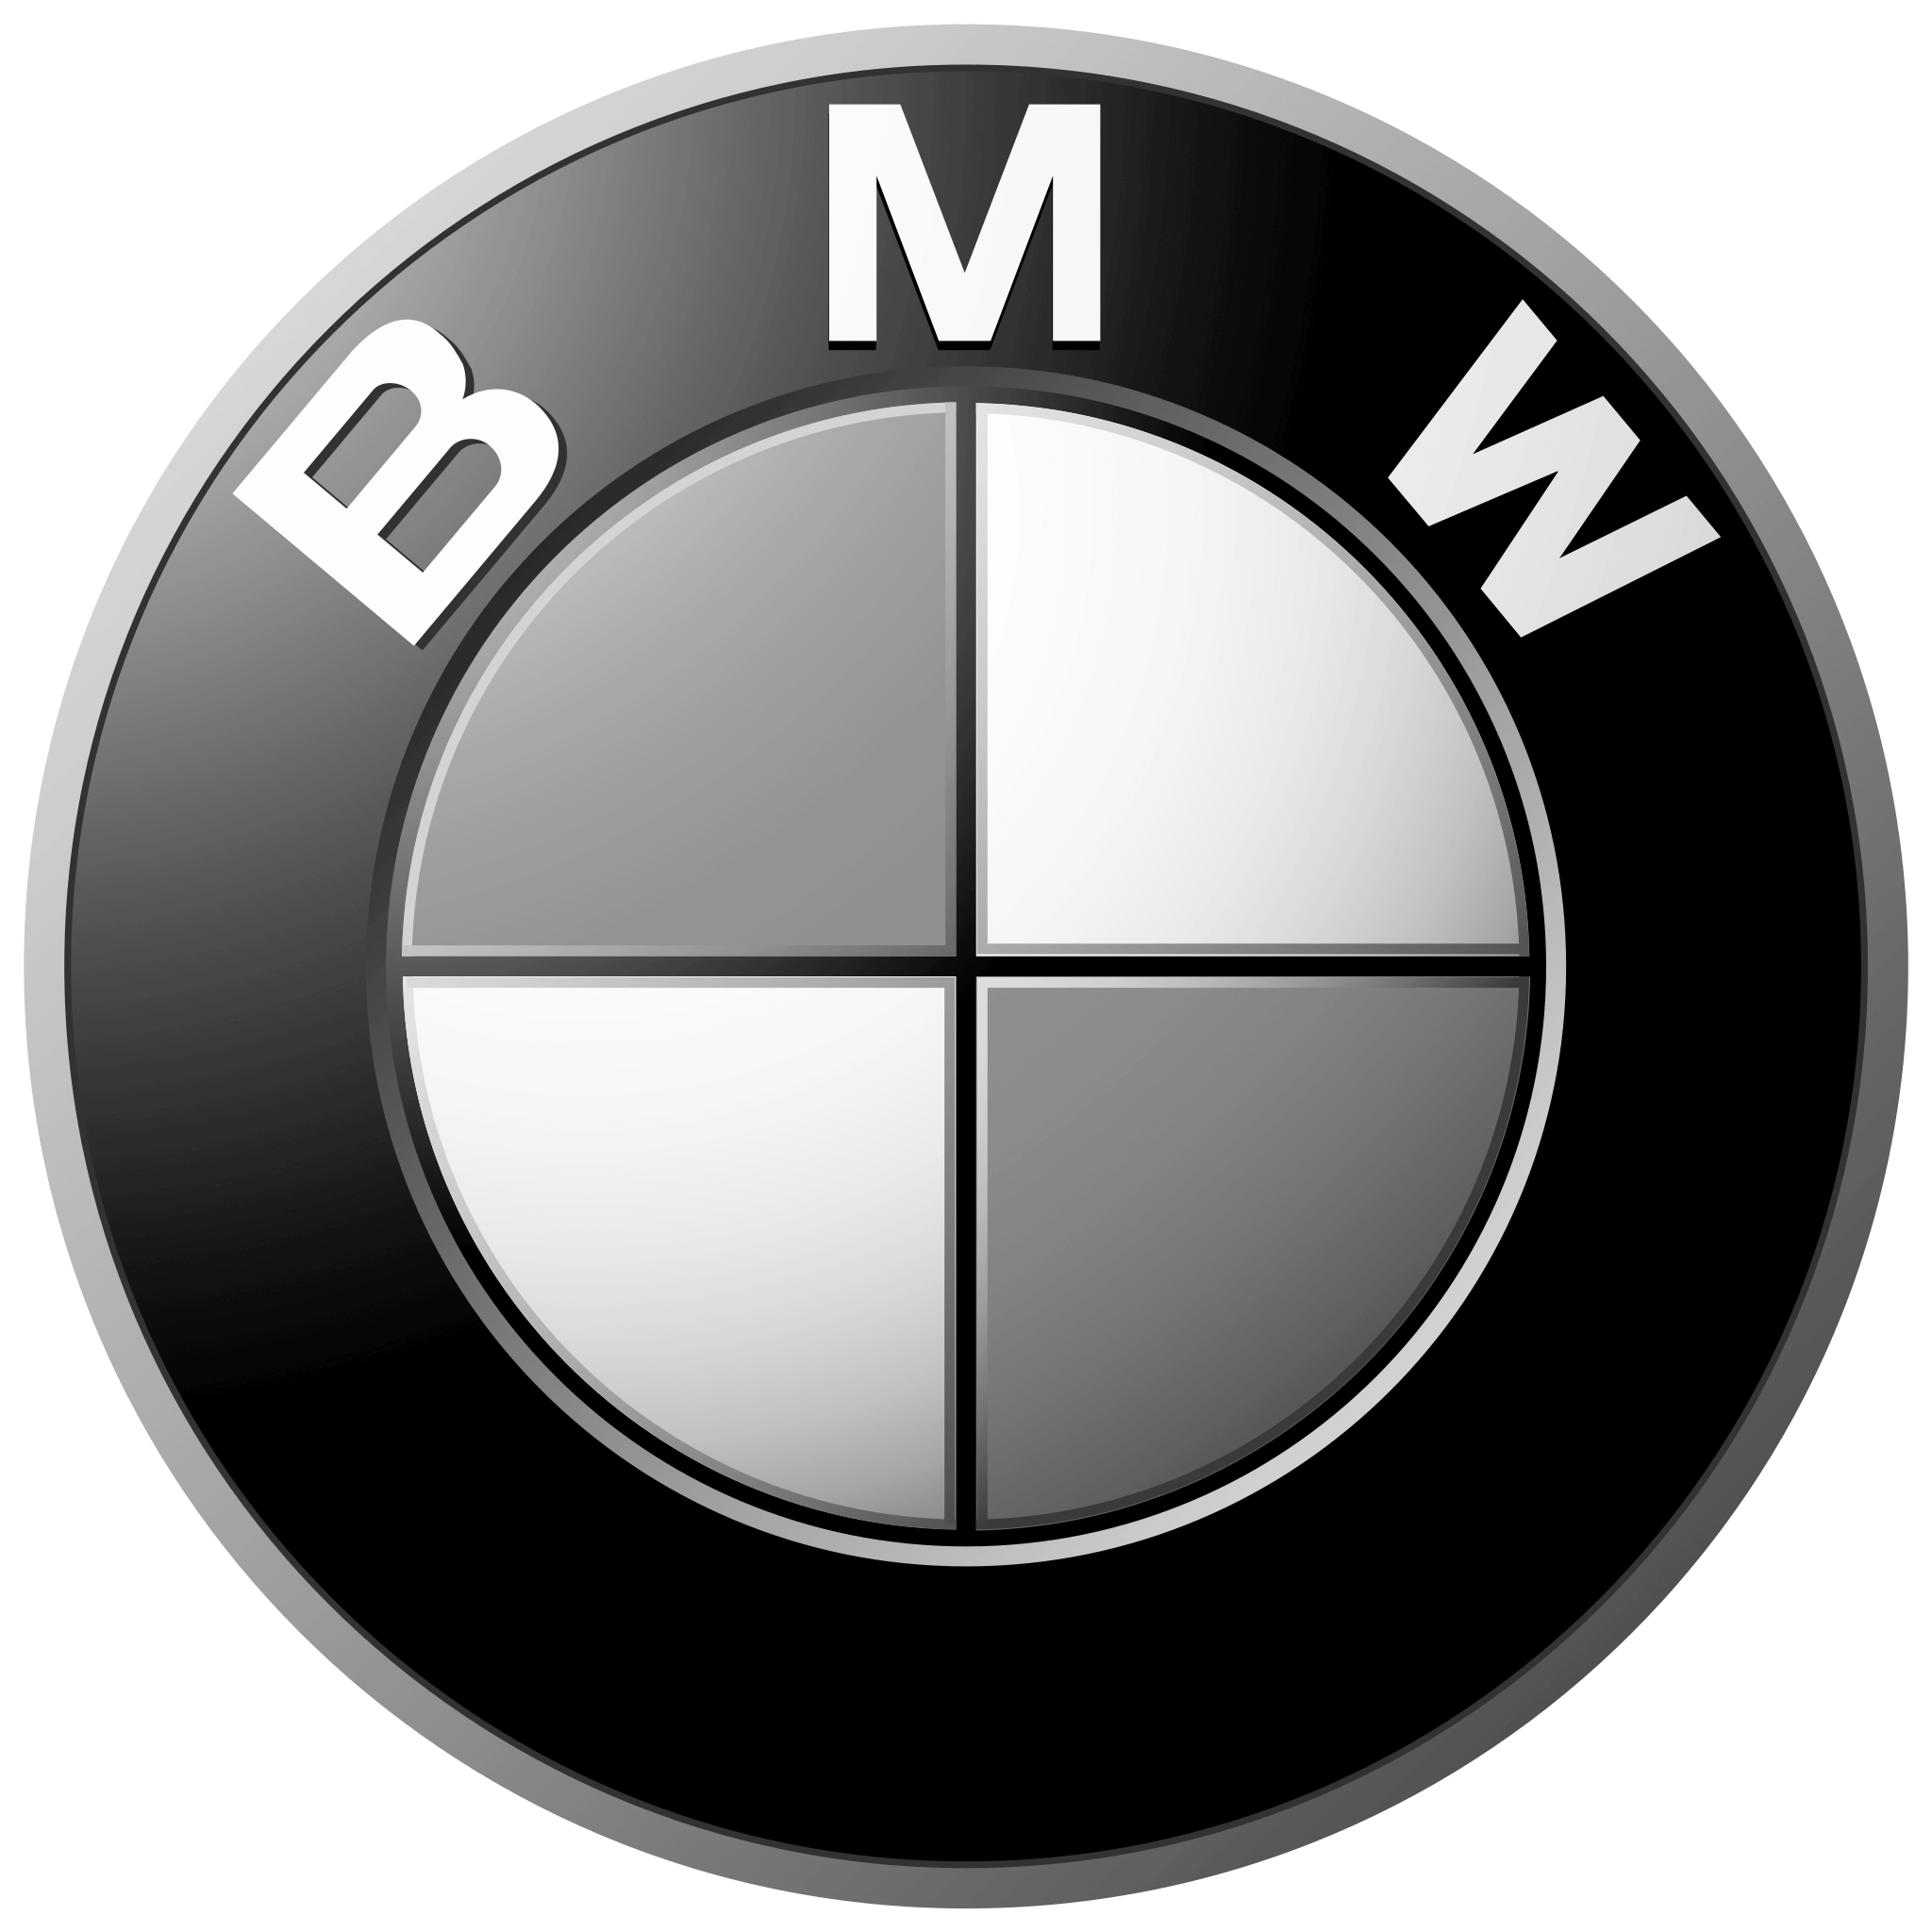 BMW - location matrimoni milano, location per matrimoni, matrimonio civile milano, eventi aziendali milano, location matrimonio, villa per matrimoni, villa per matrimoni lombardia